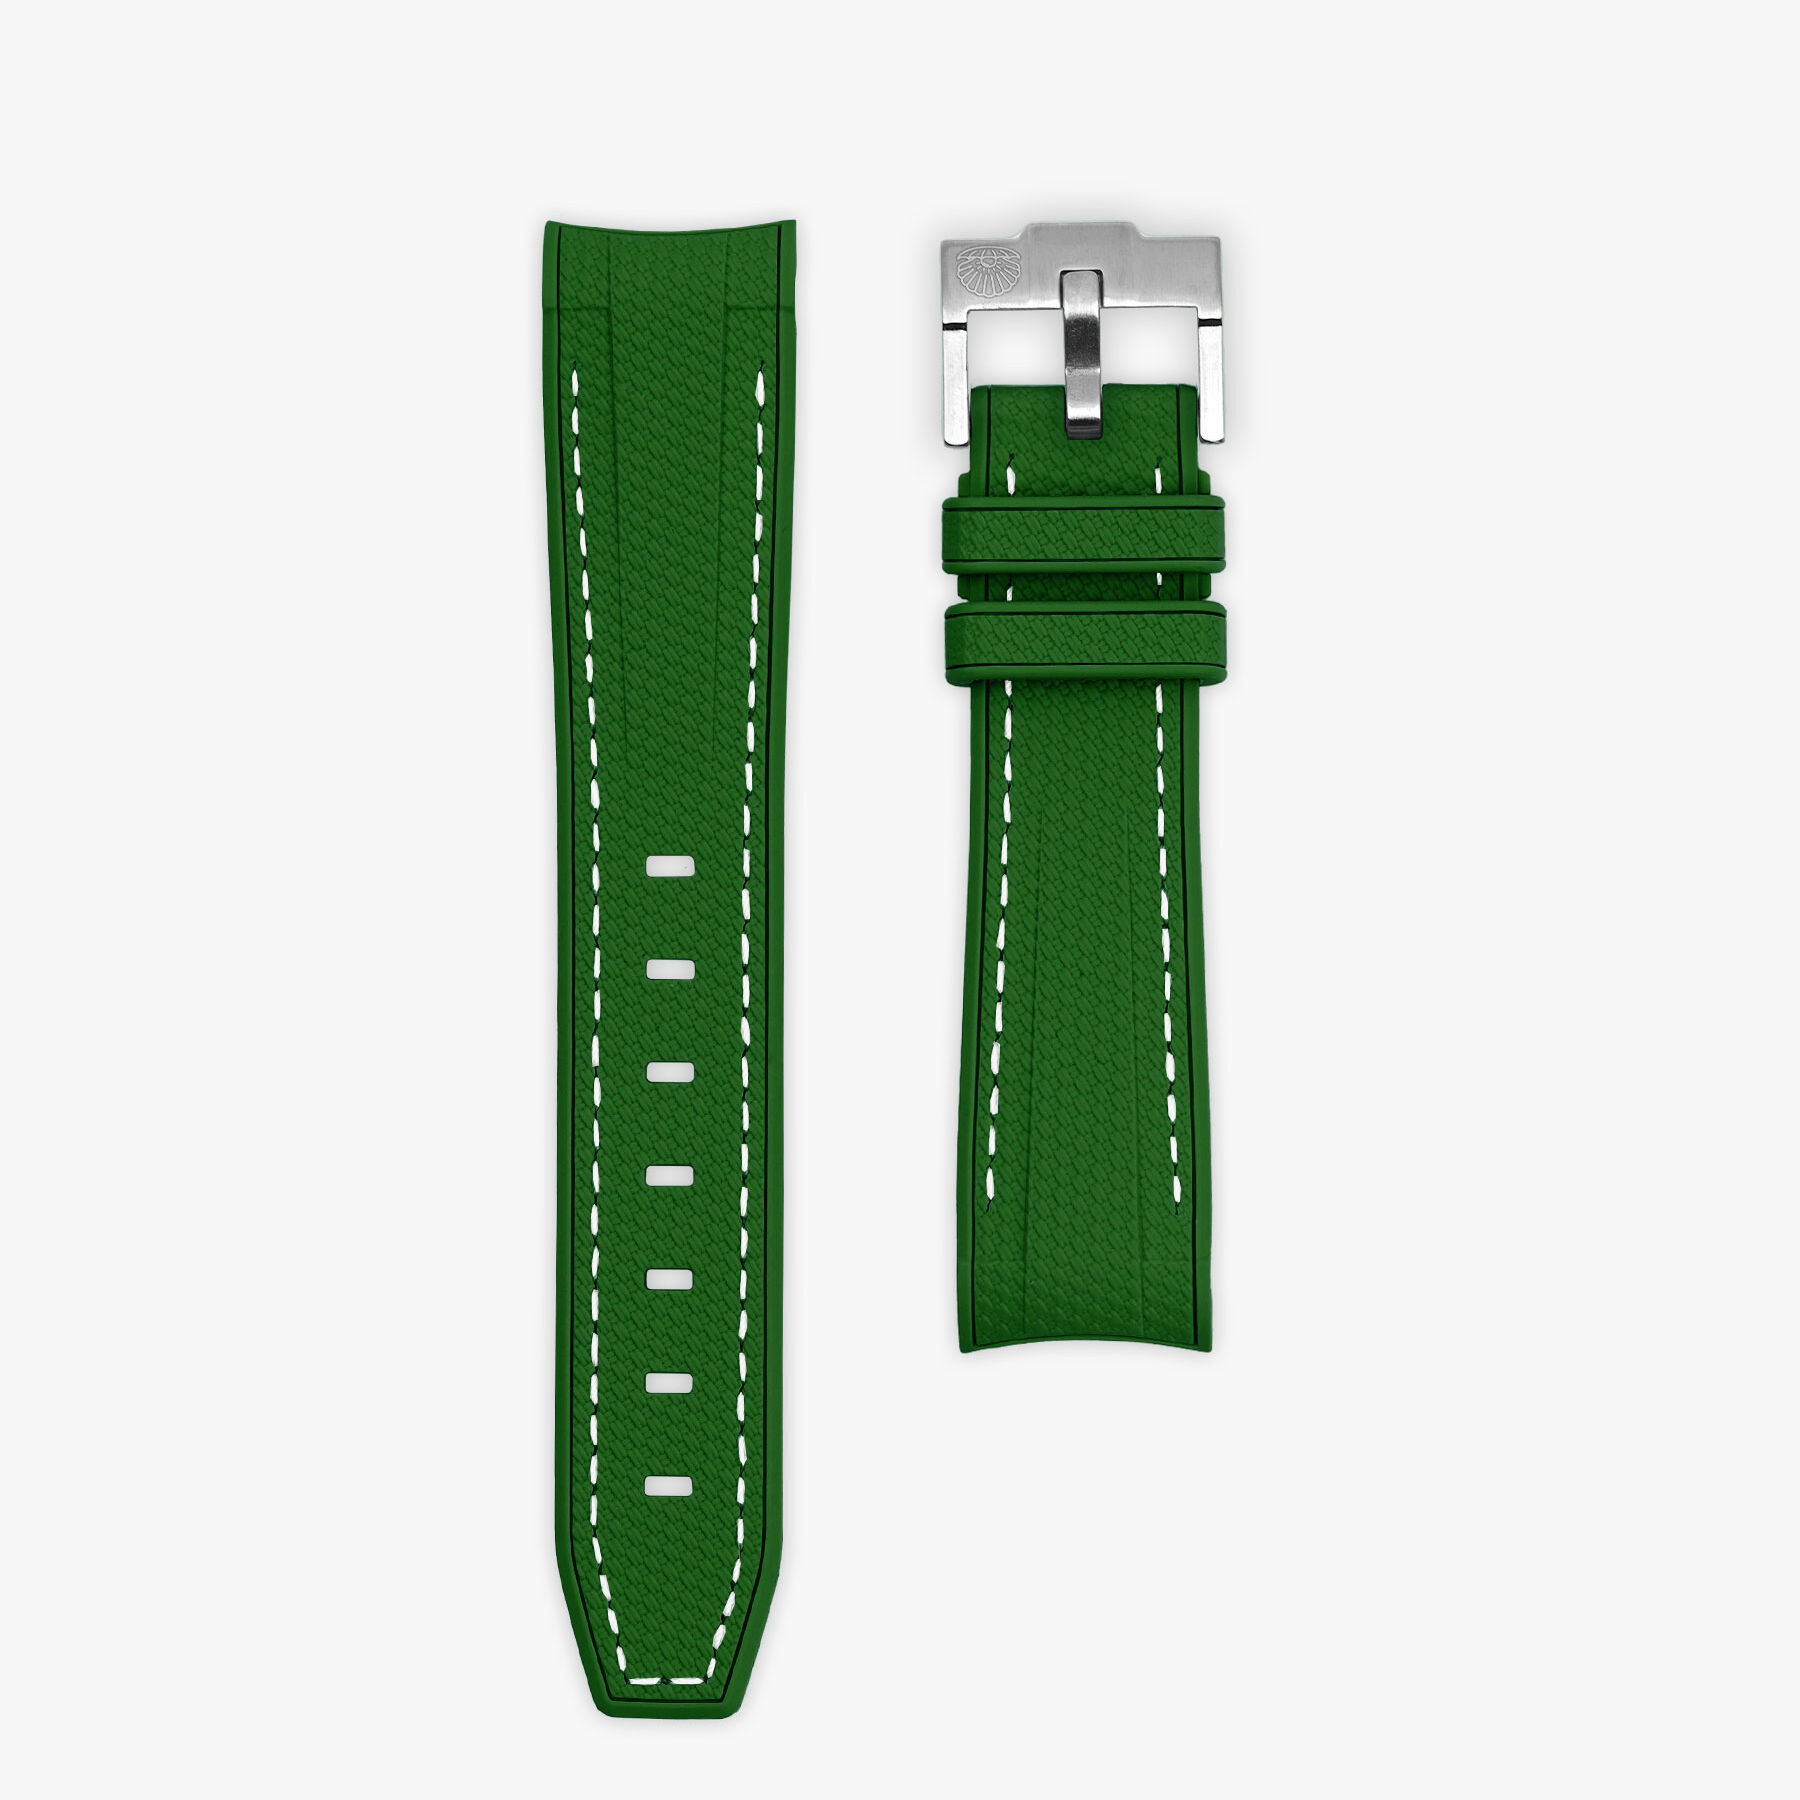 Amazon green Rubber MoonSwatch Strap